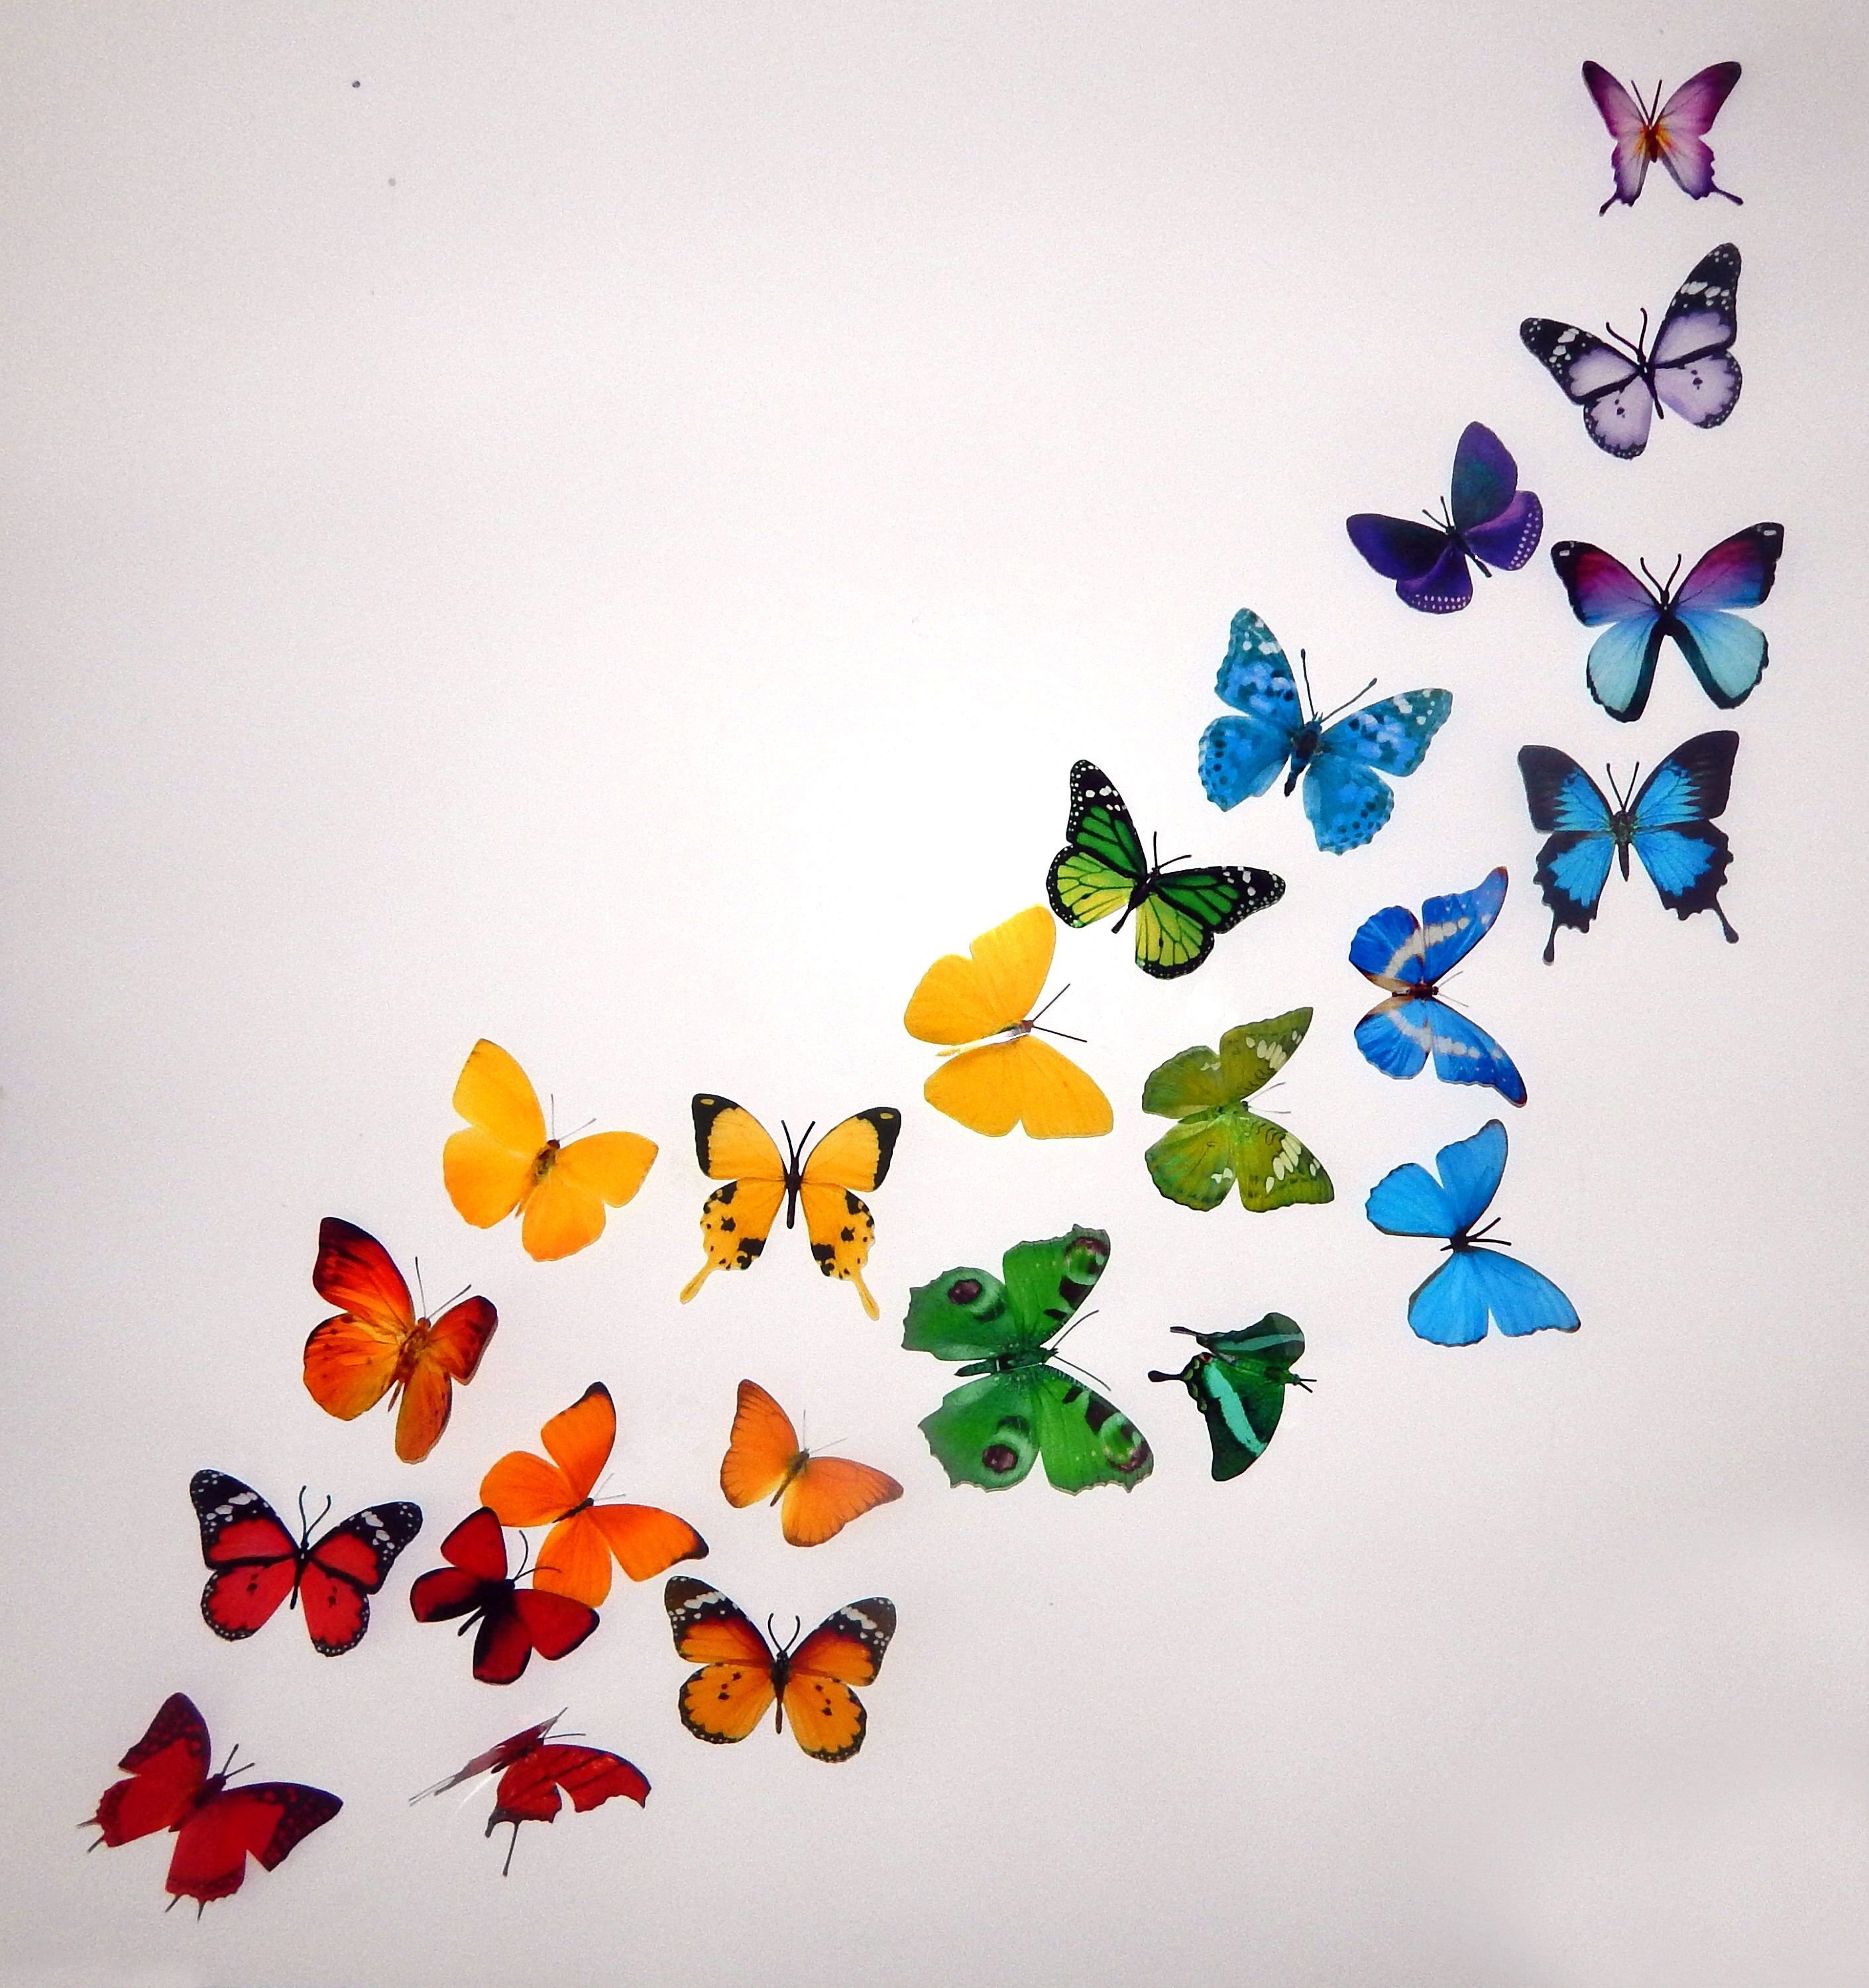 Бабочка Поделки на праздники Шаблон бабочки для вырезания из бумаги с фото